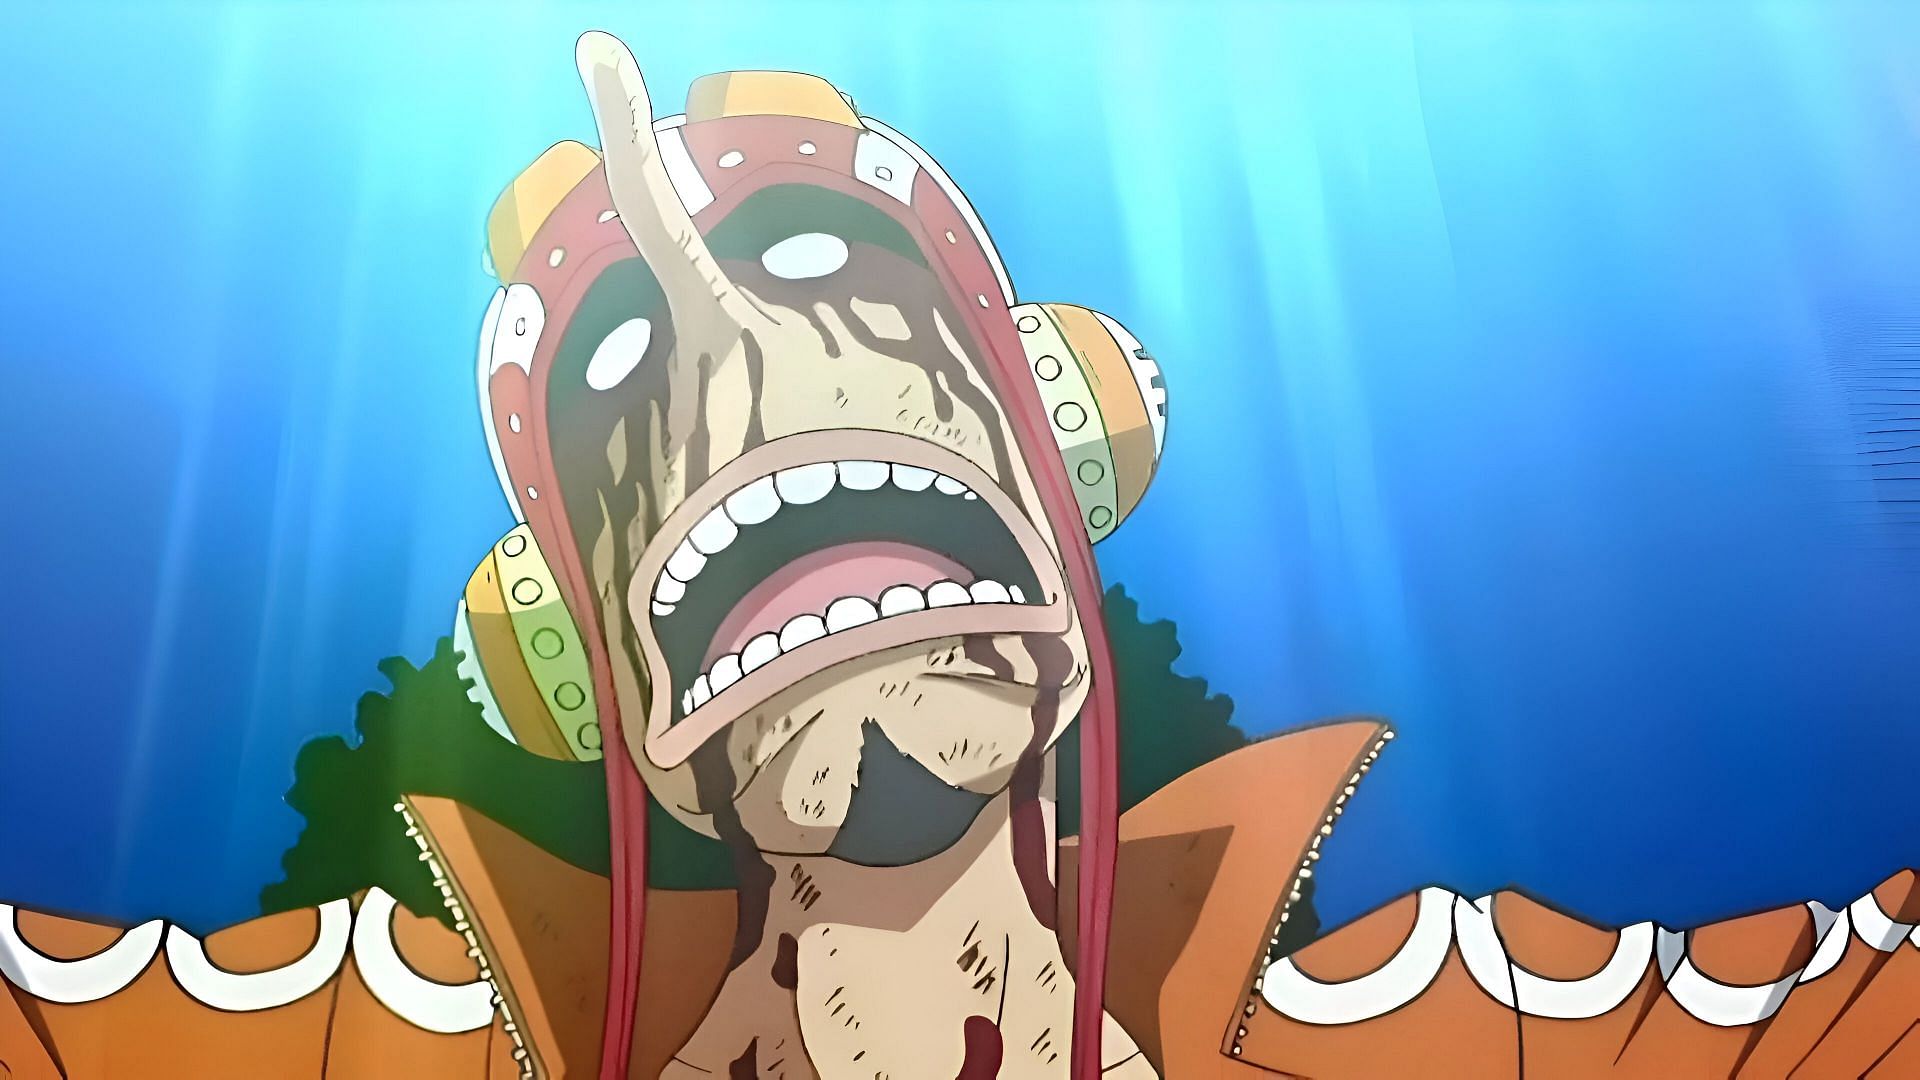 Usopp as seen in the anime (Image via Toei Animation)